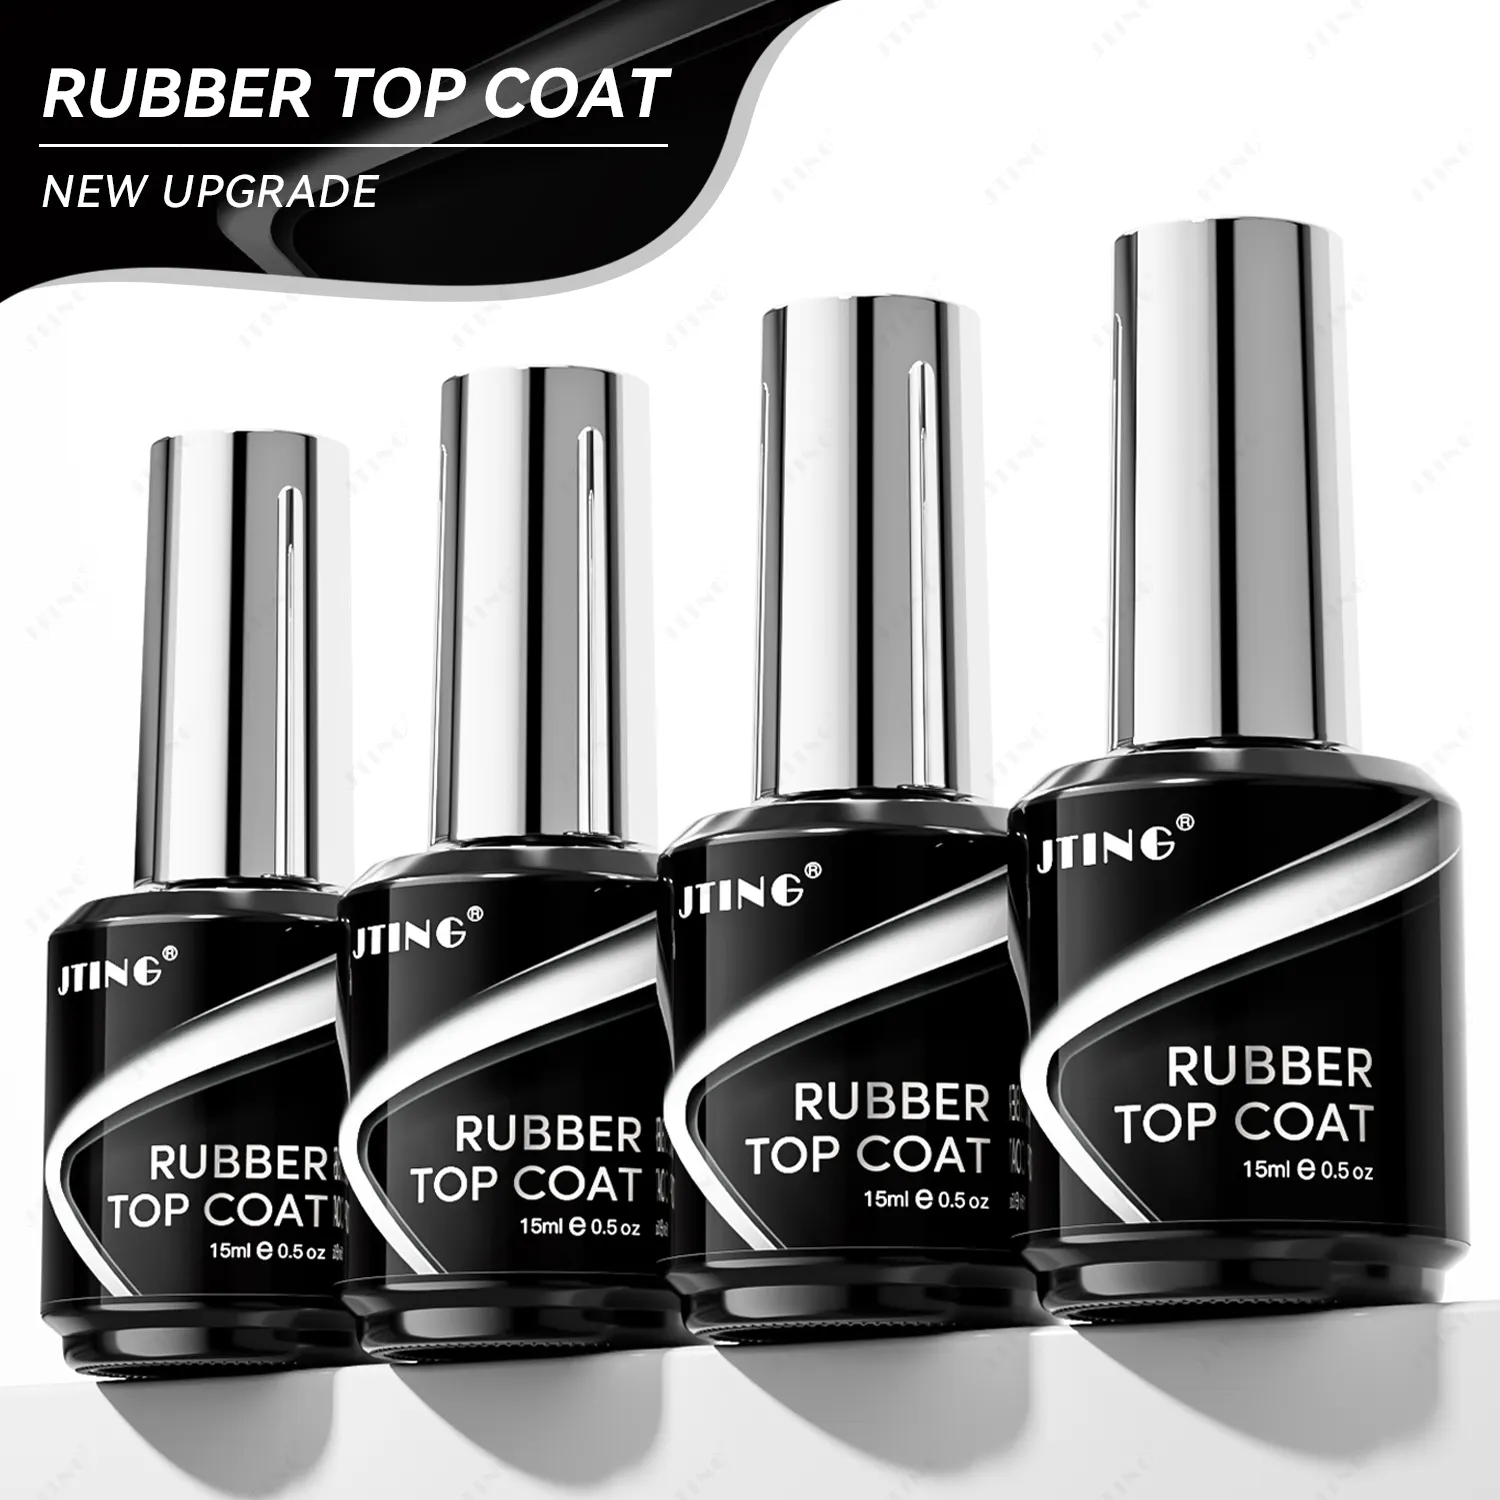 JTING Super quality long lasting shiny rubber top coat gel nail polish semi permanent soak off hema free no wipe top coat